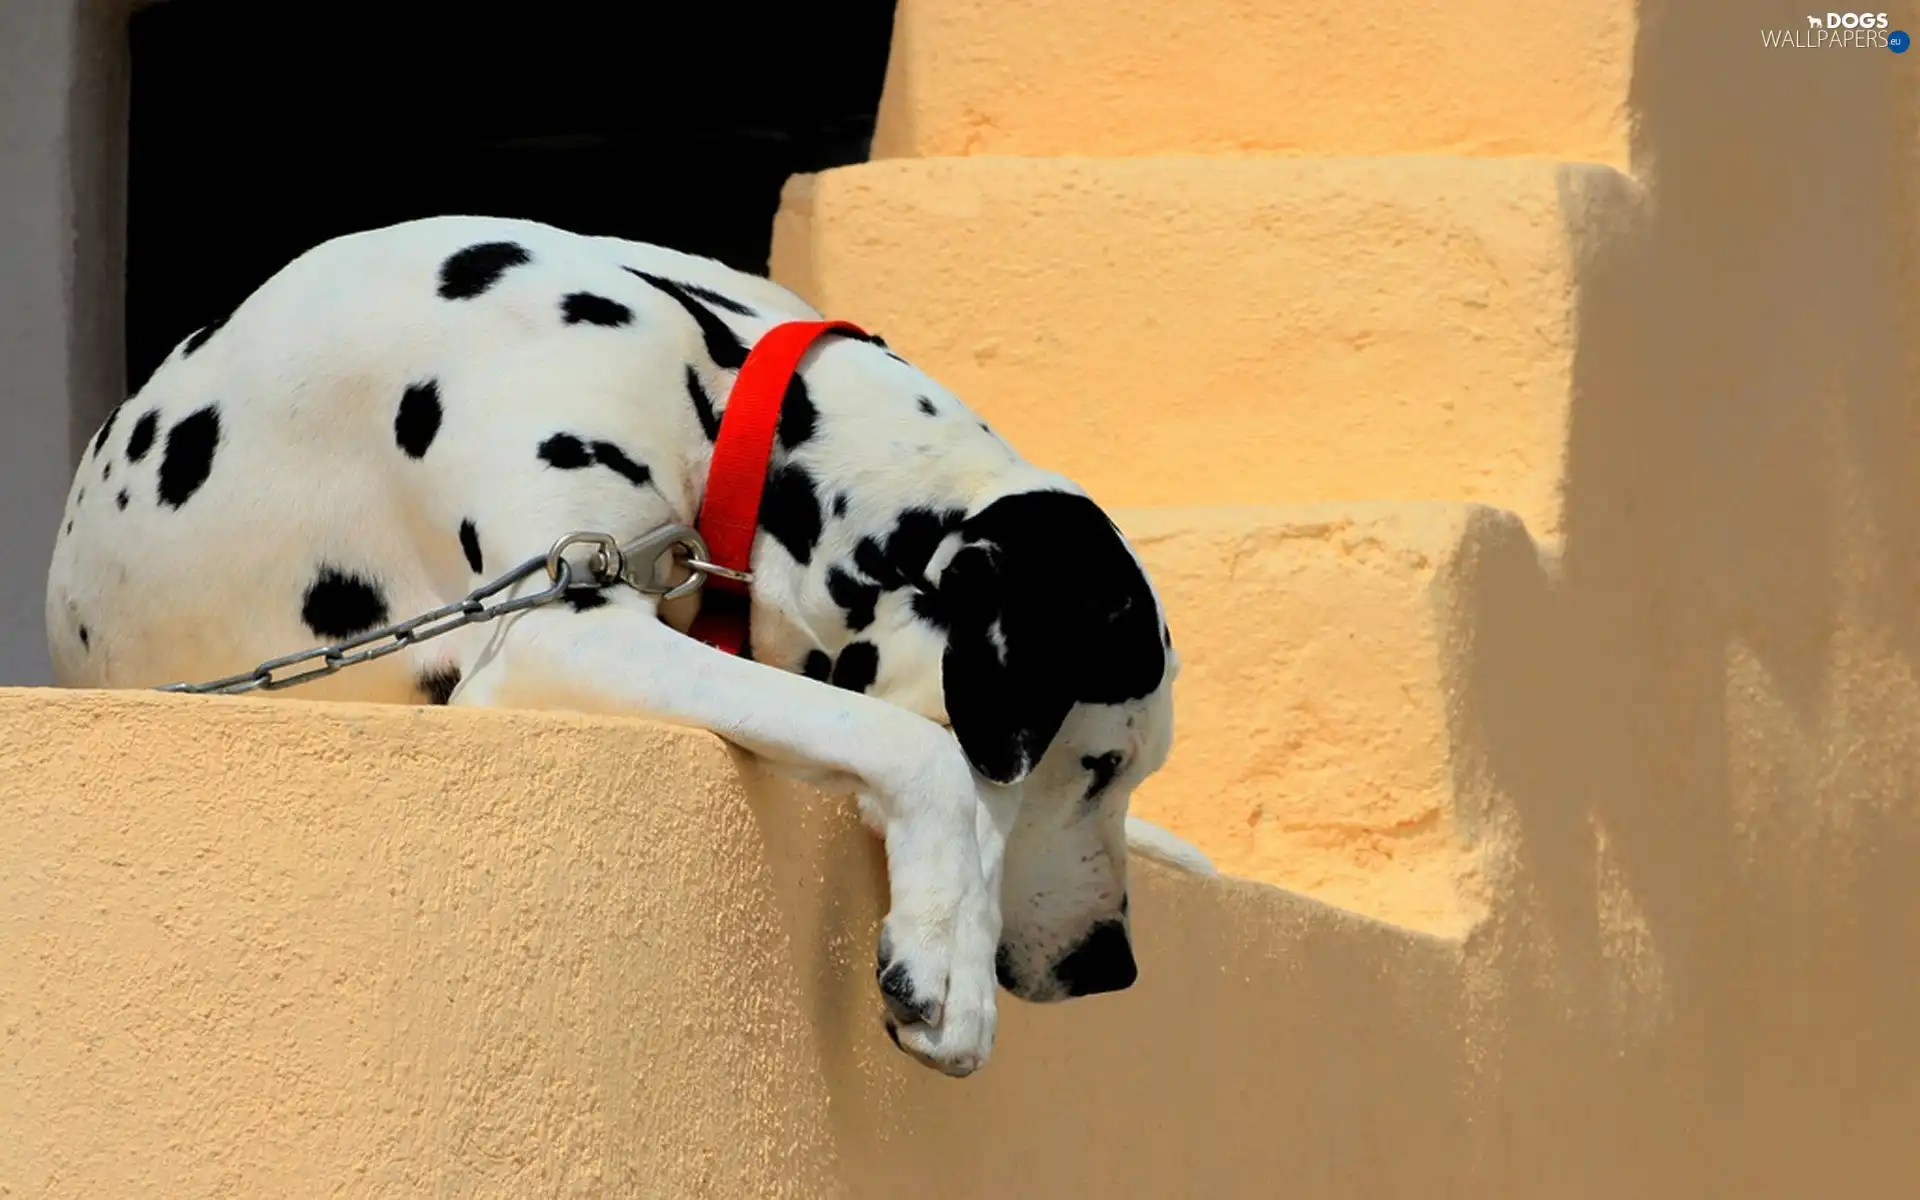 Dalmatian, Stairs, dog